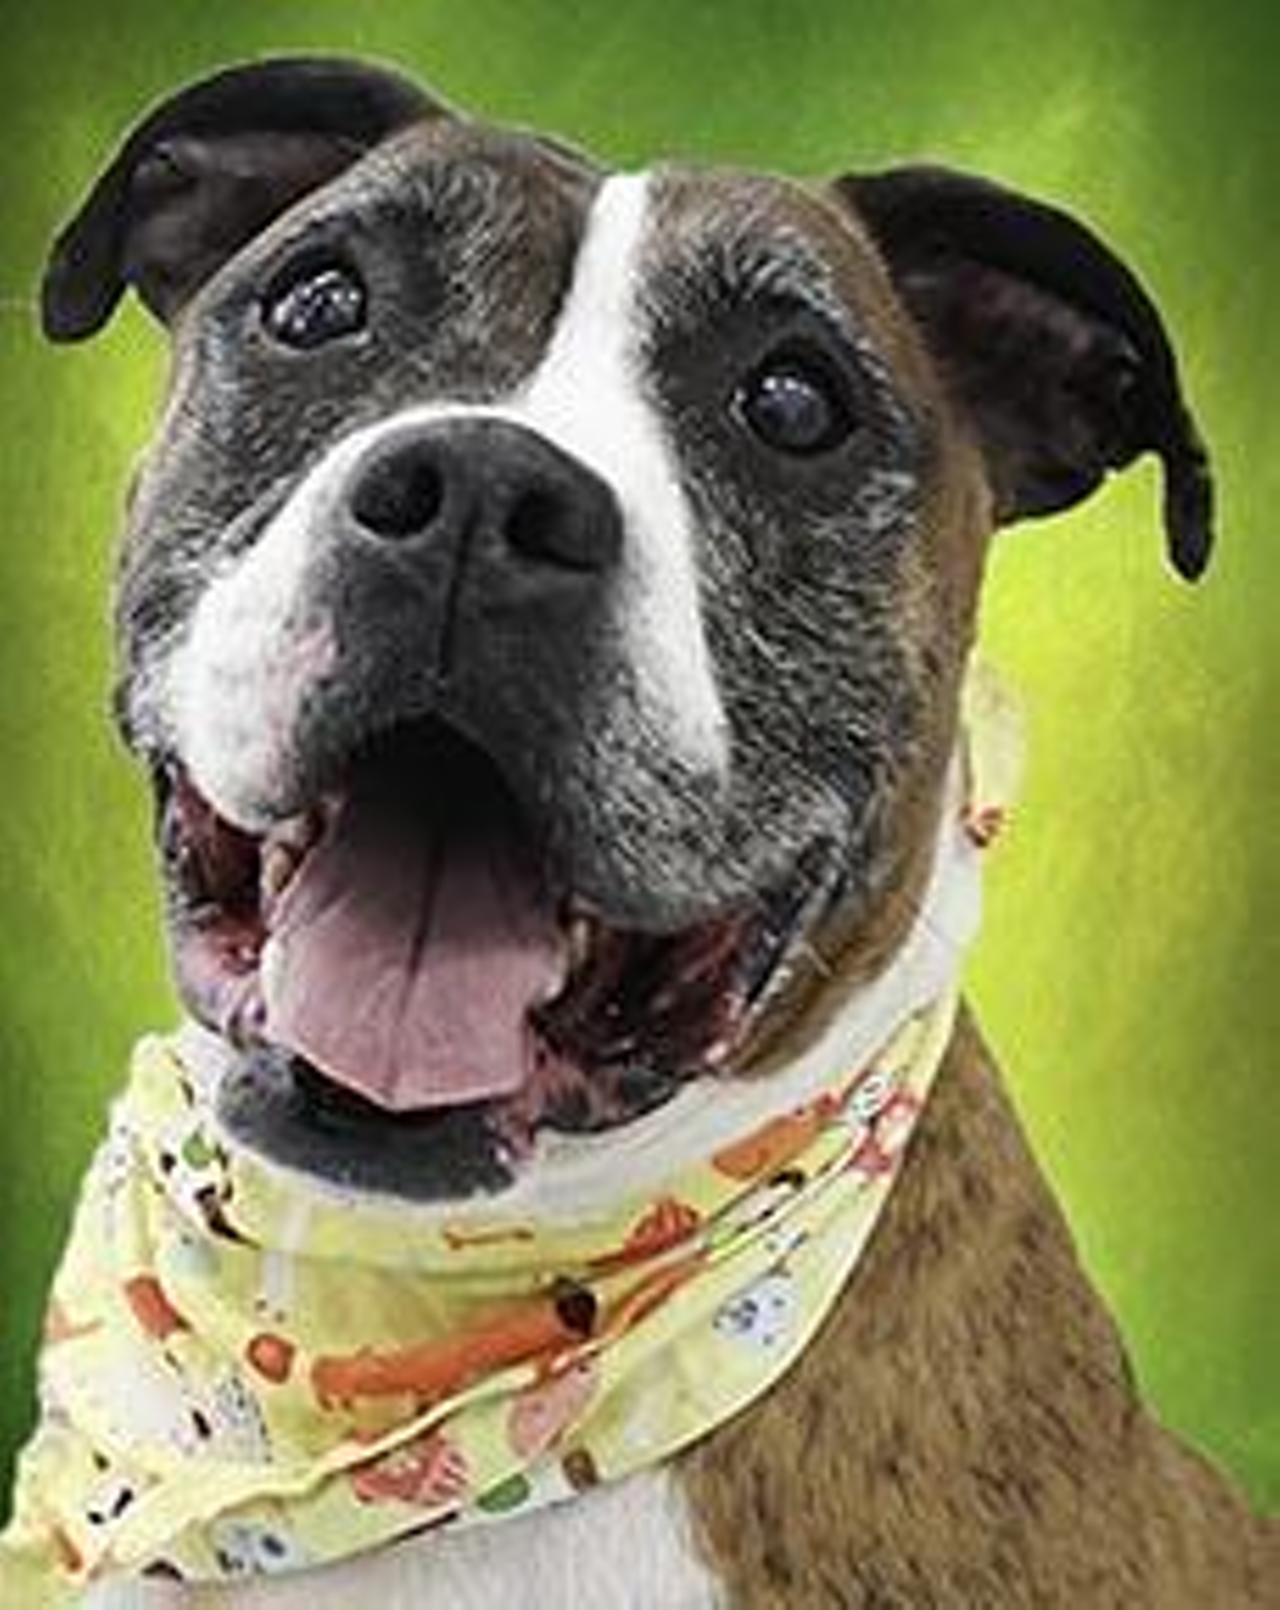 Name: Cyrus | Breed: Box/Terrier/American Pit Bull | Age: 11 years old | Sex: Male | Rescue: SPCA Cincinnati